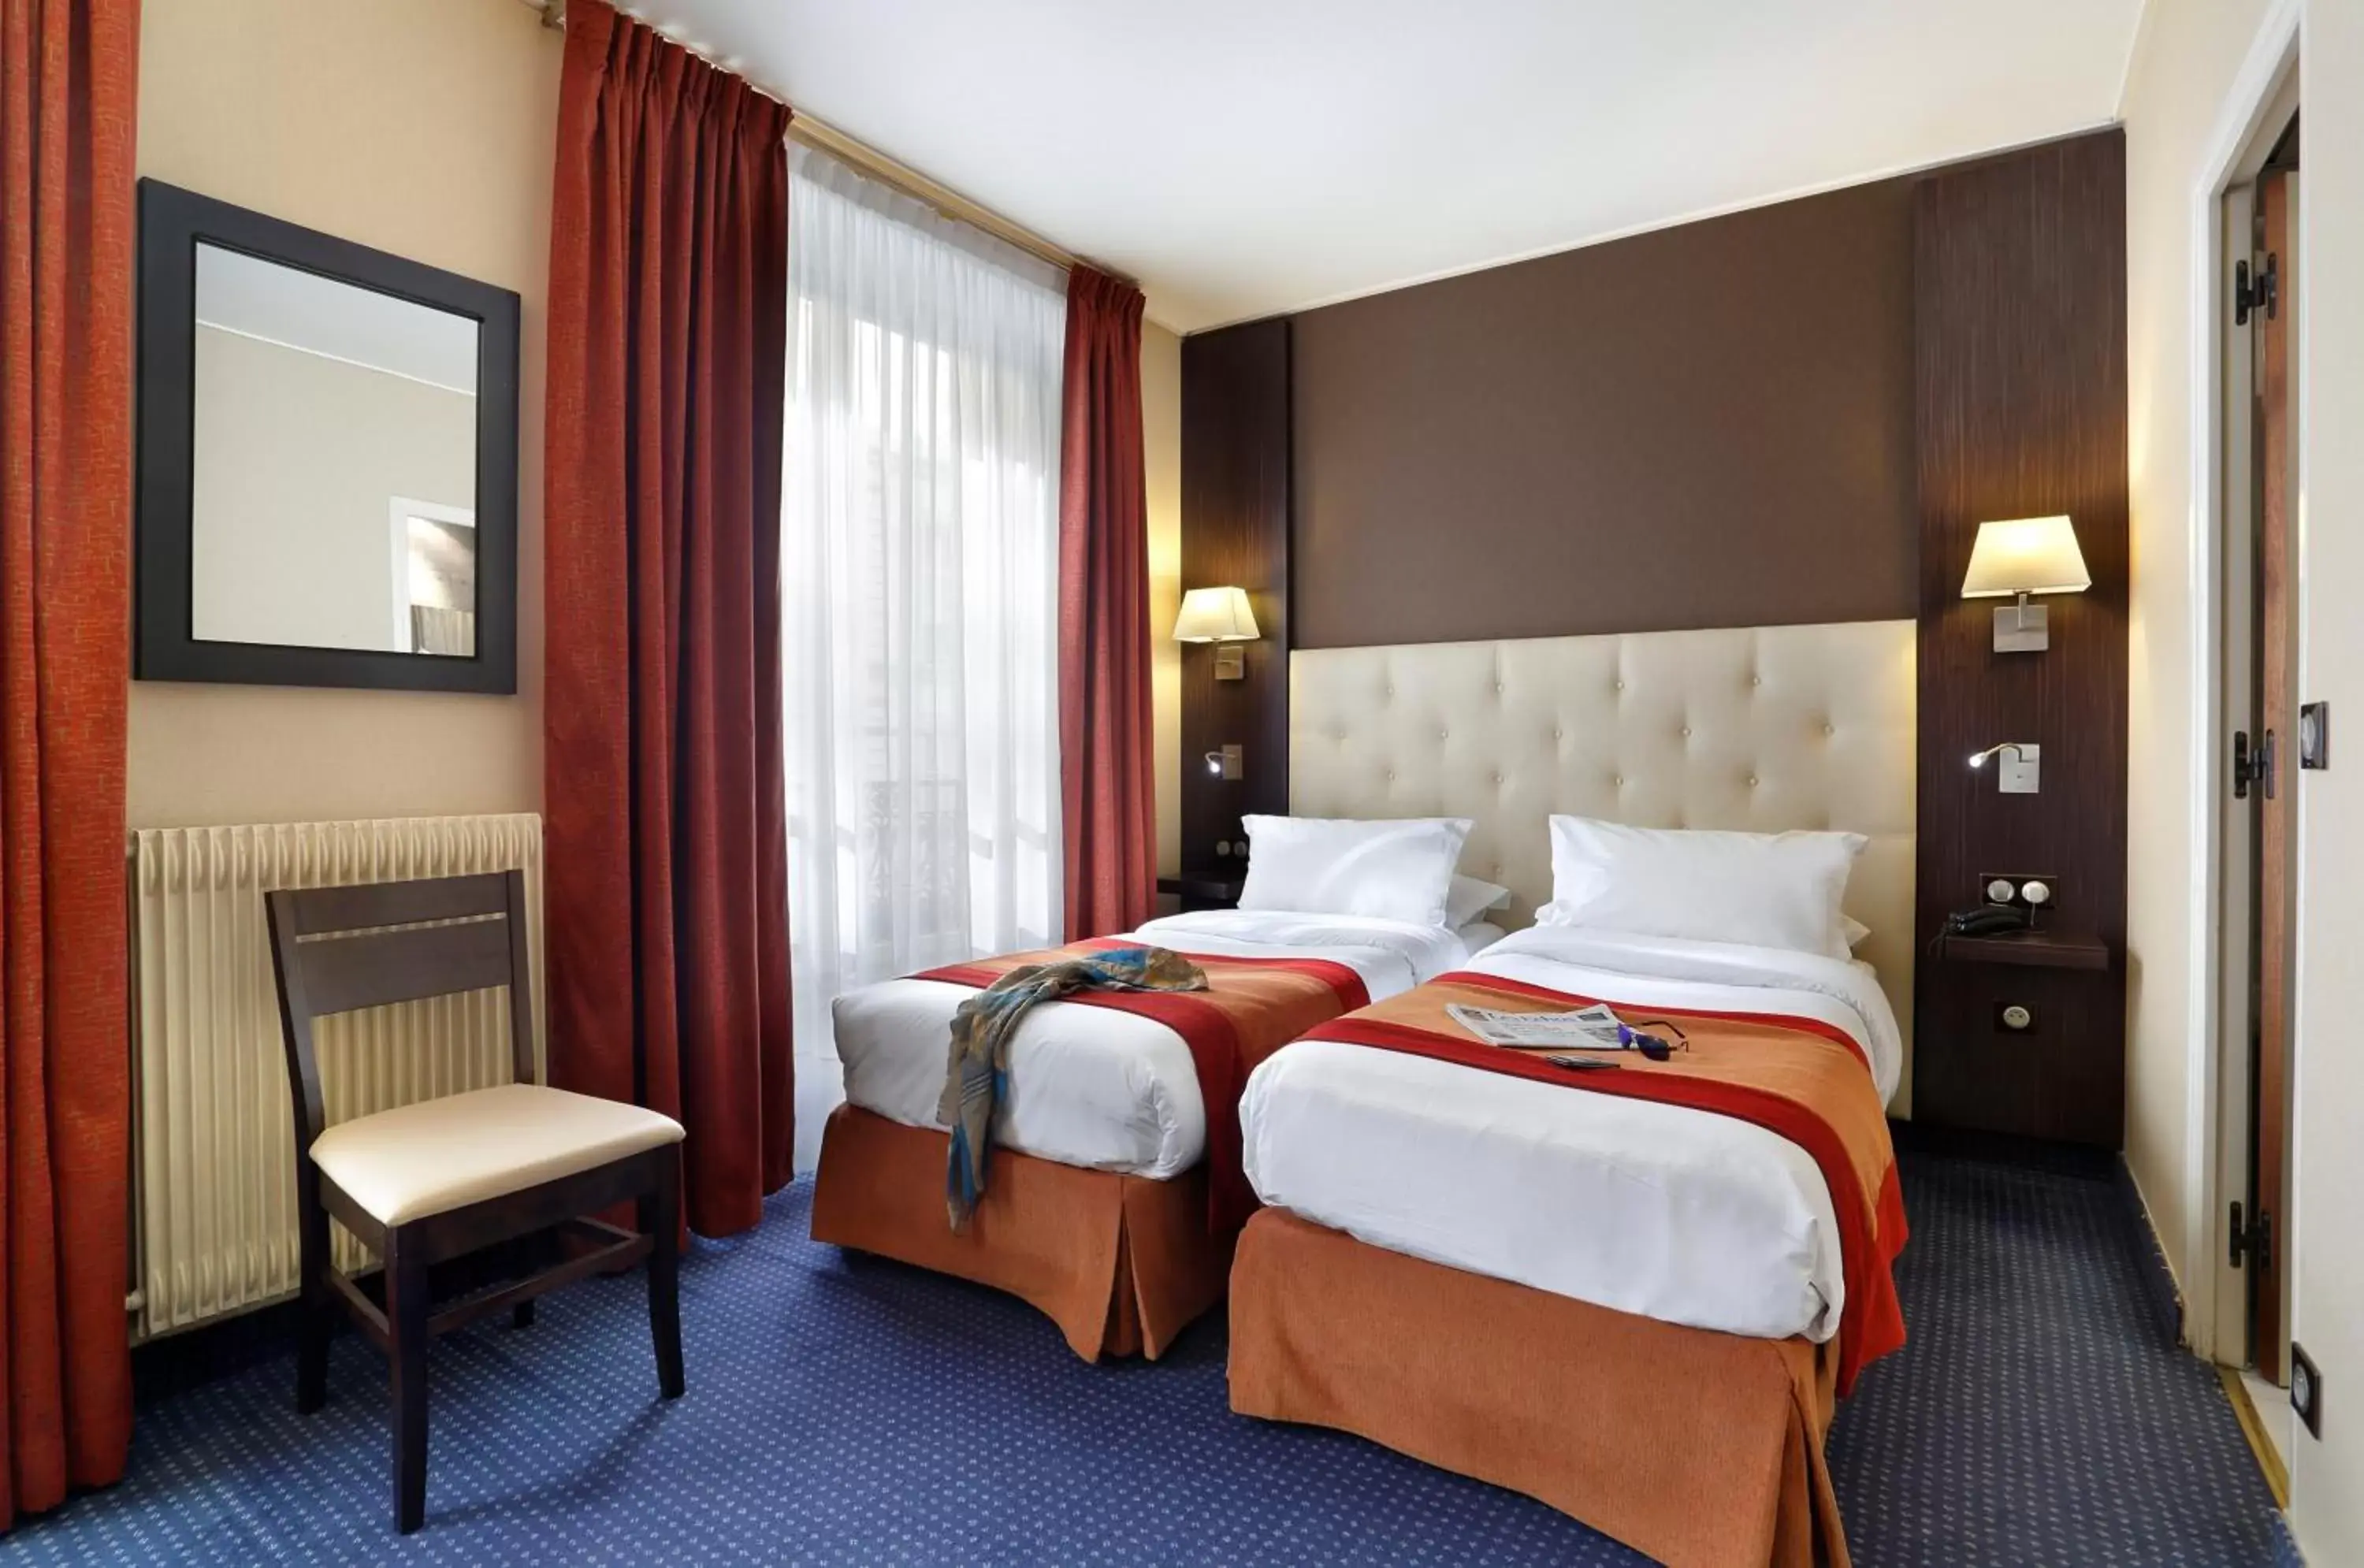 Twin Room in Hotel Paix Republique